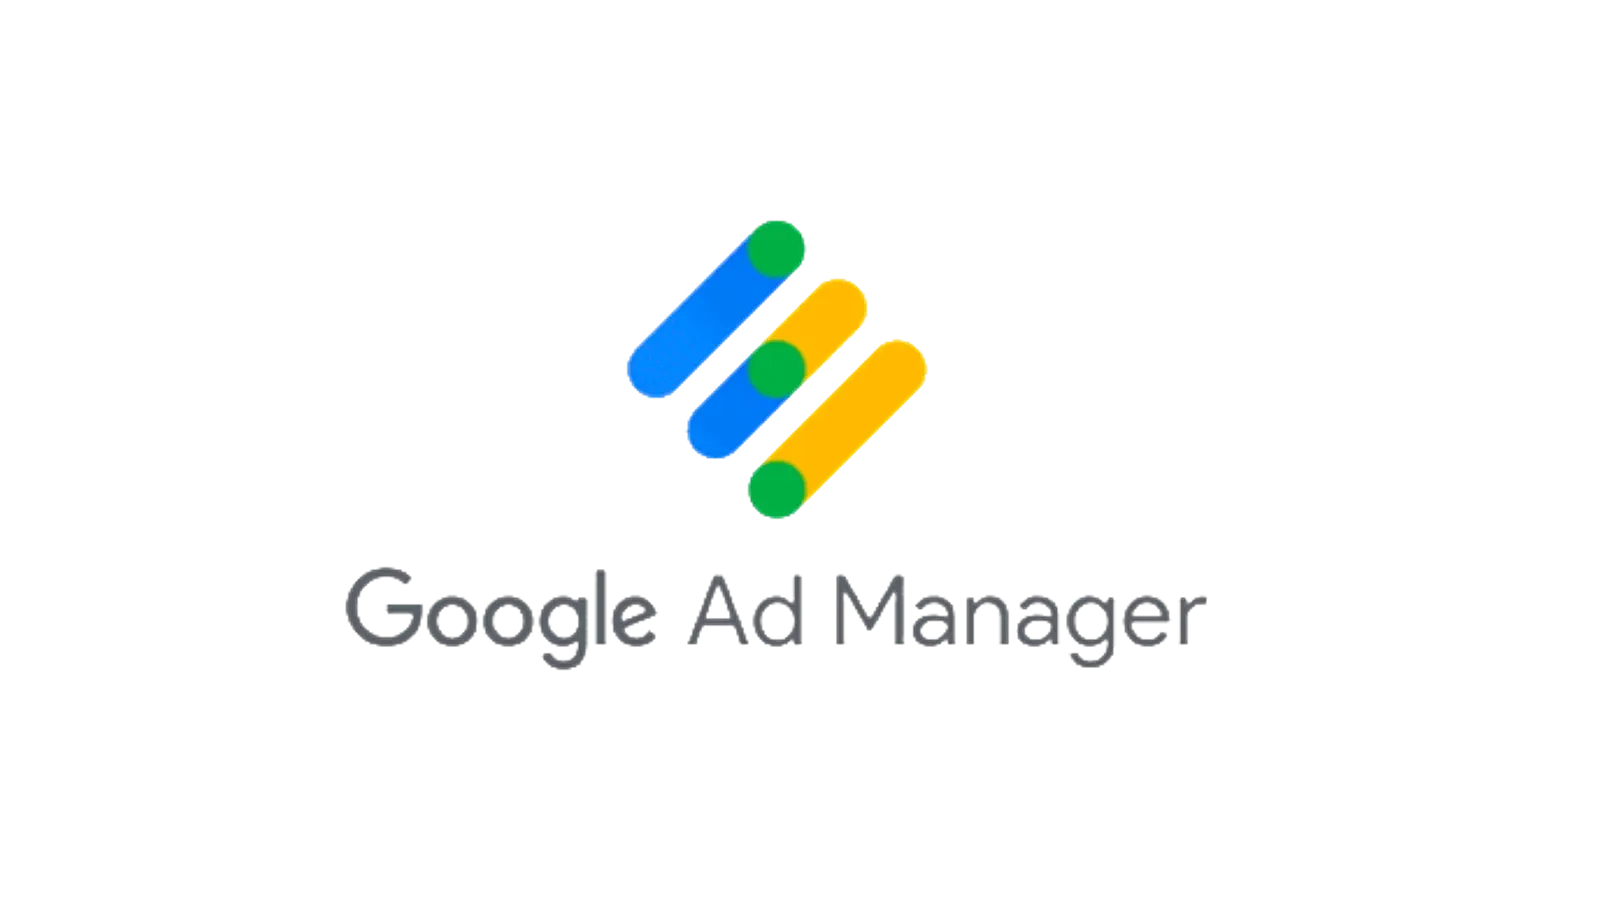 Google Ad Manager logo